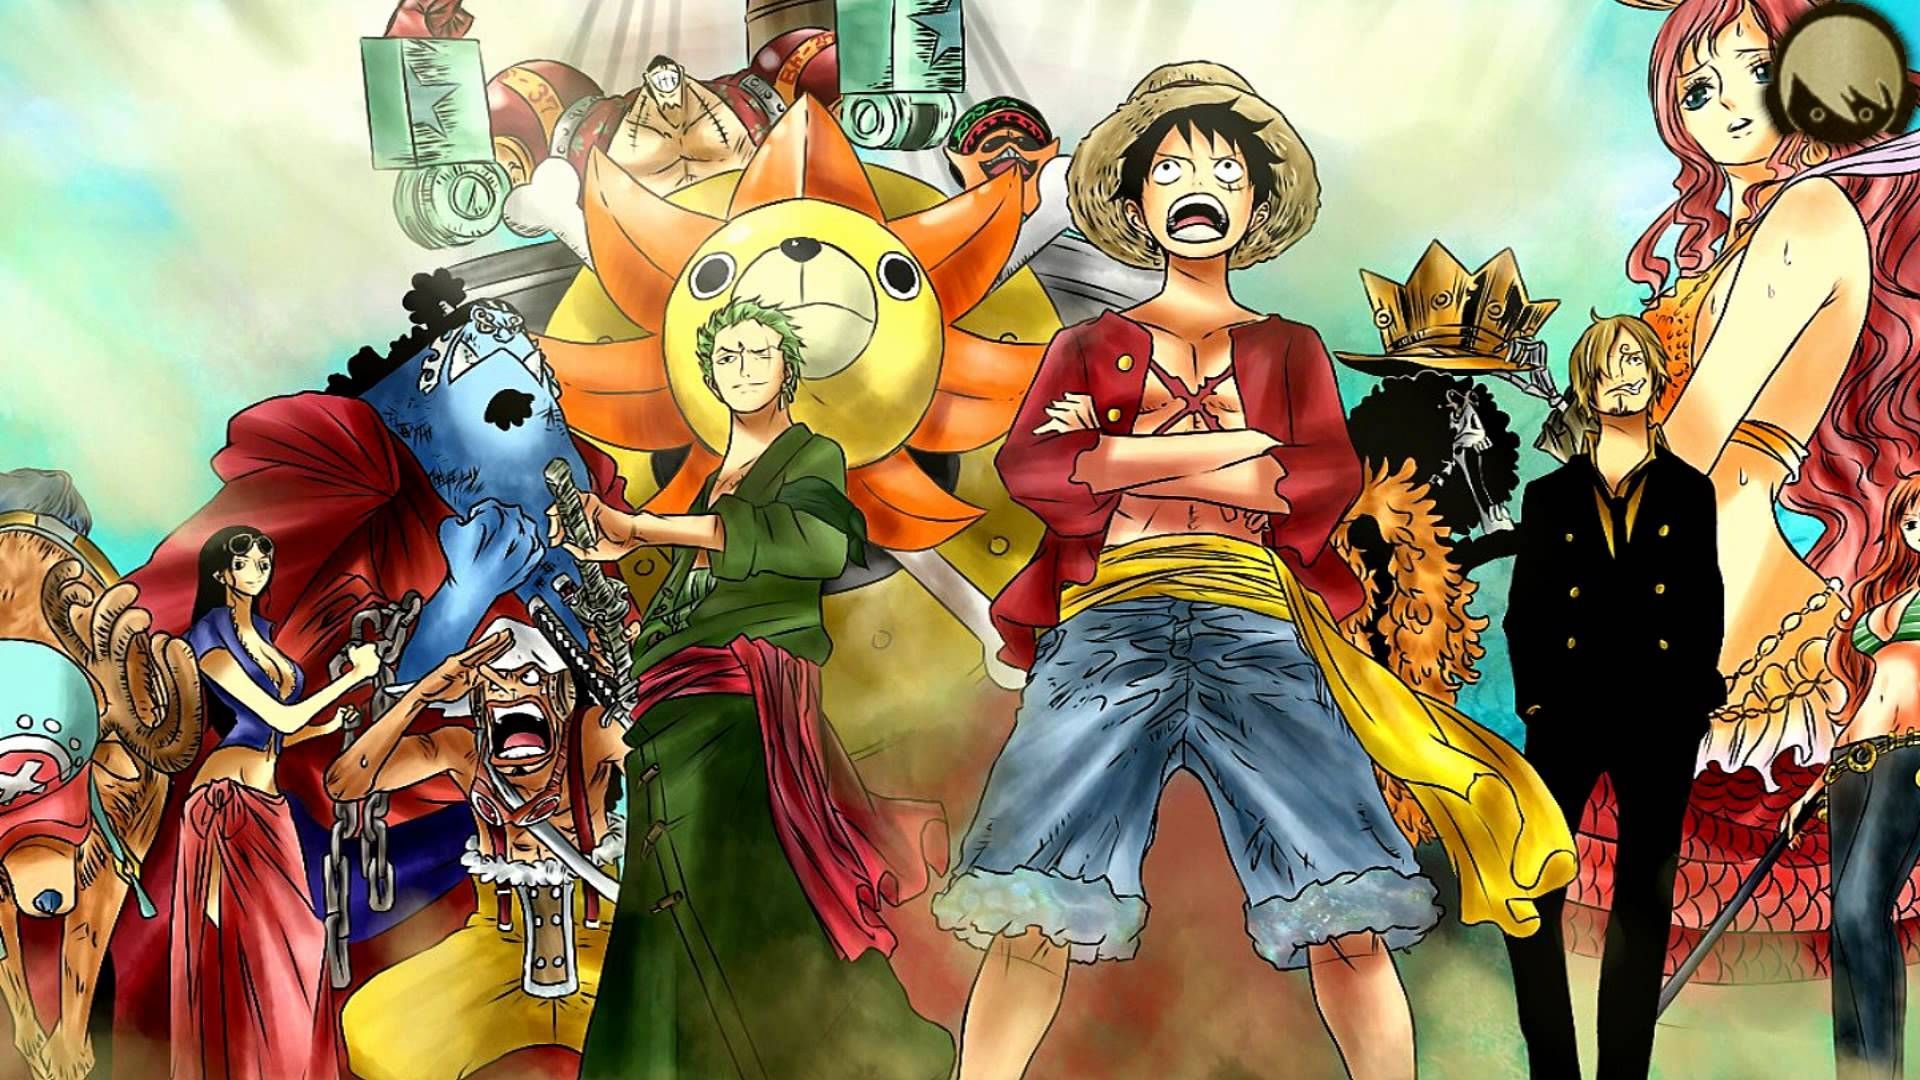 Wallpaper One Piece Vs Naruto en 2020 (avec image)